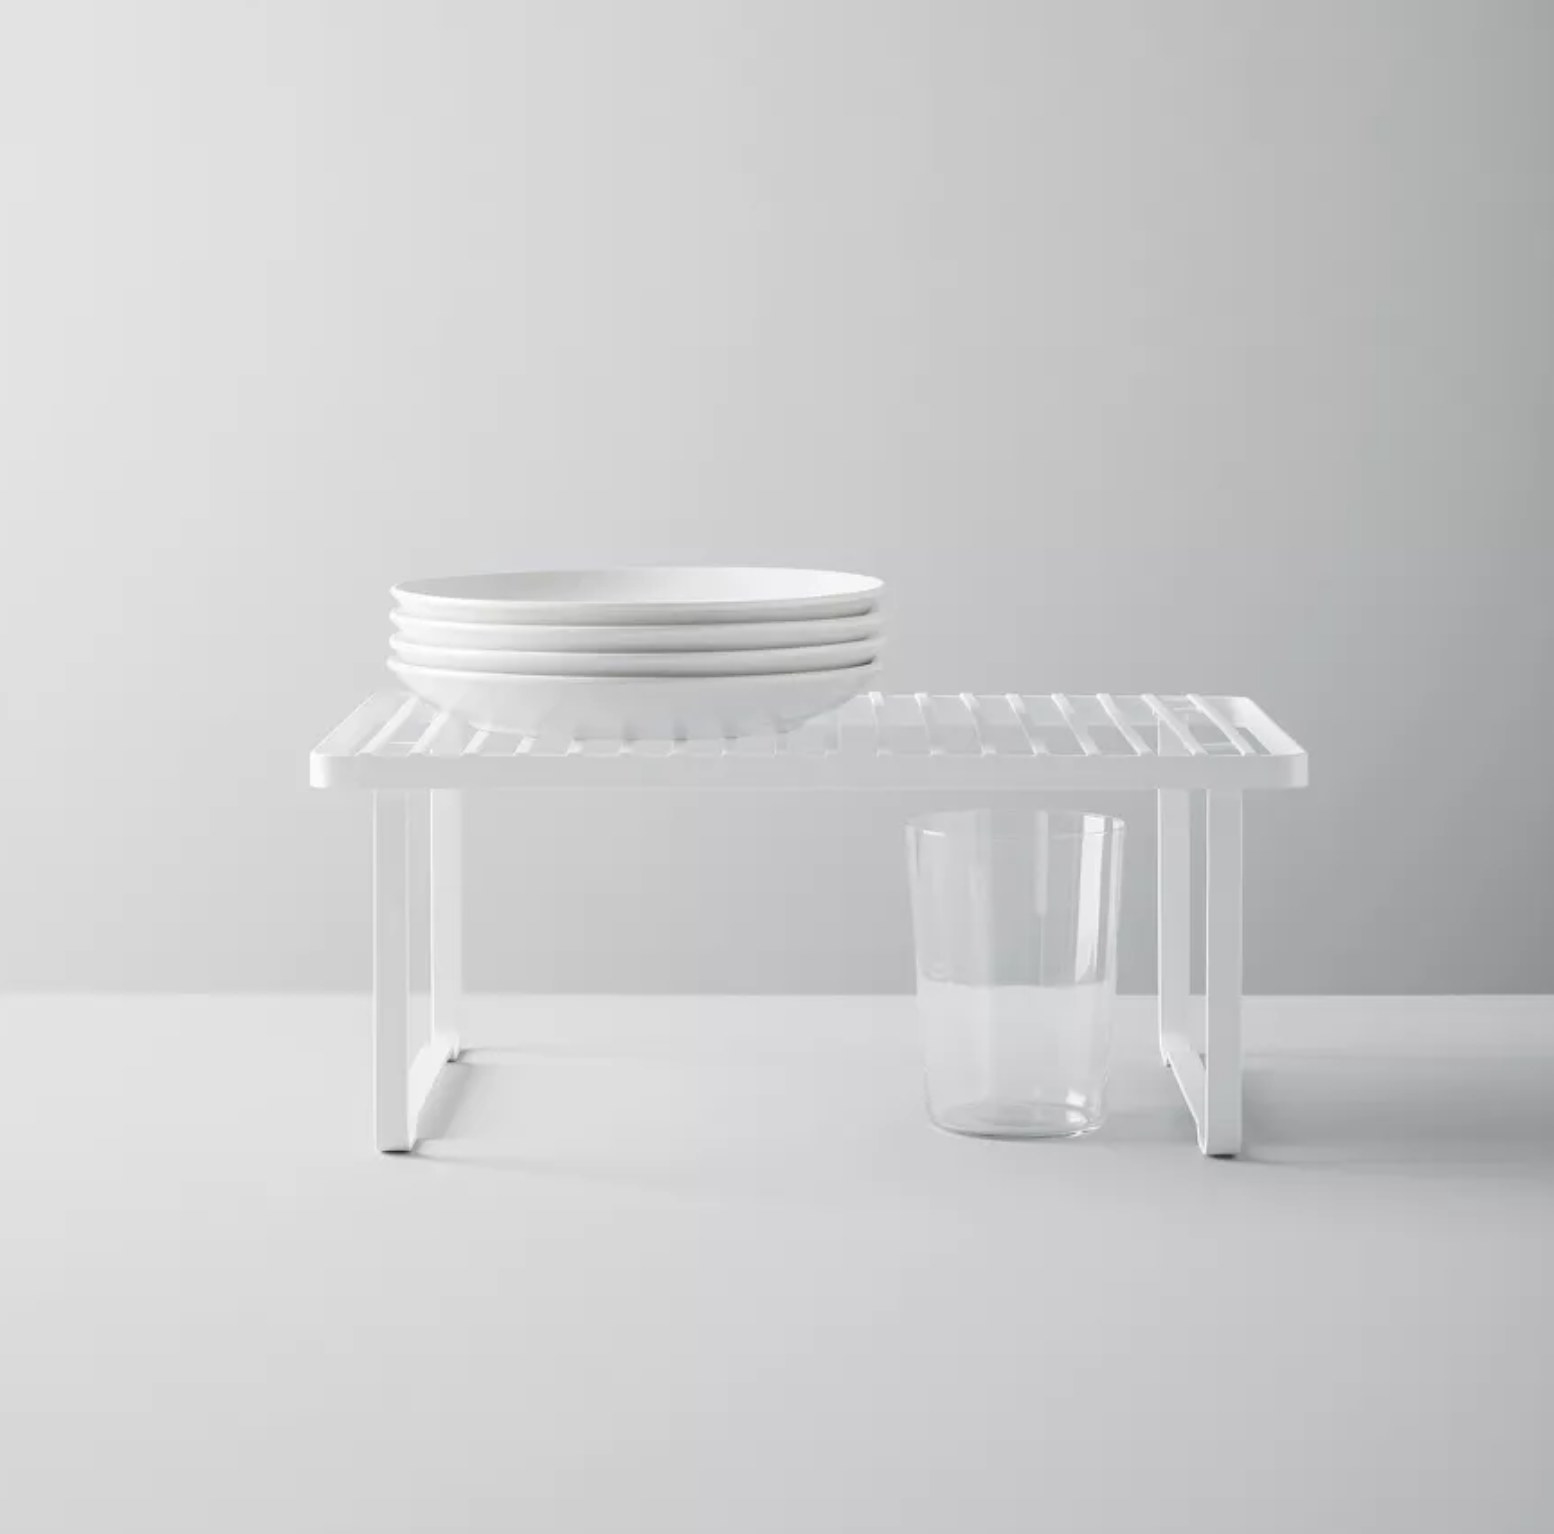 A white shelf holding plates over a glass